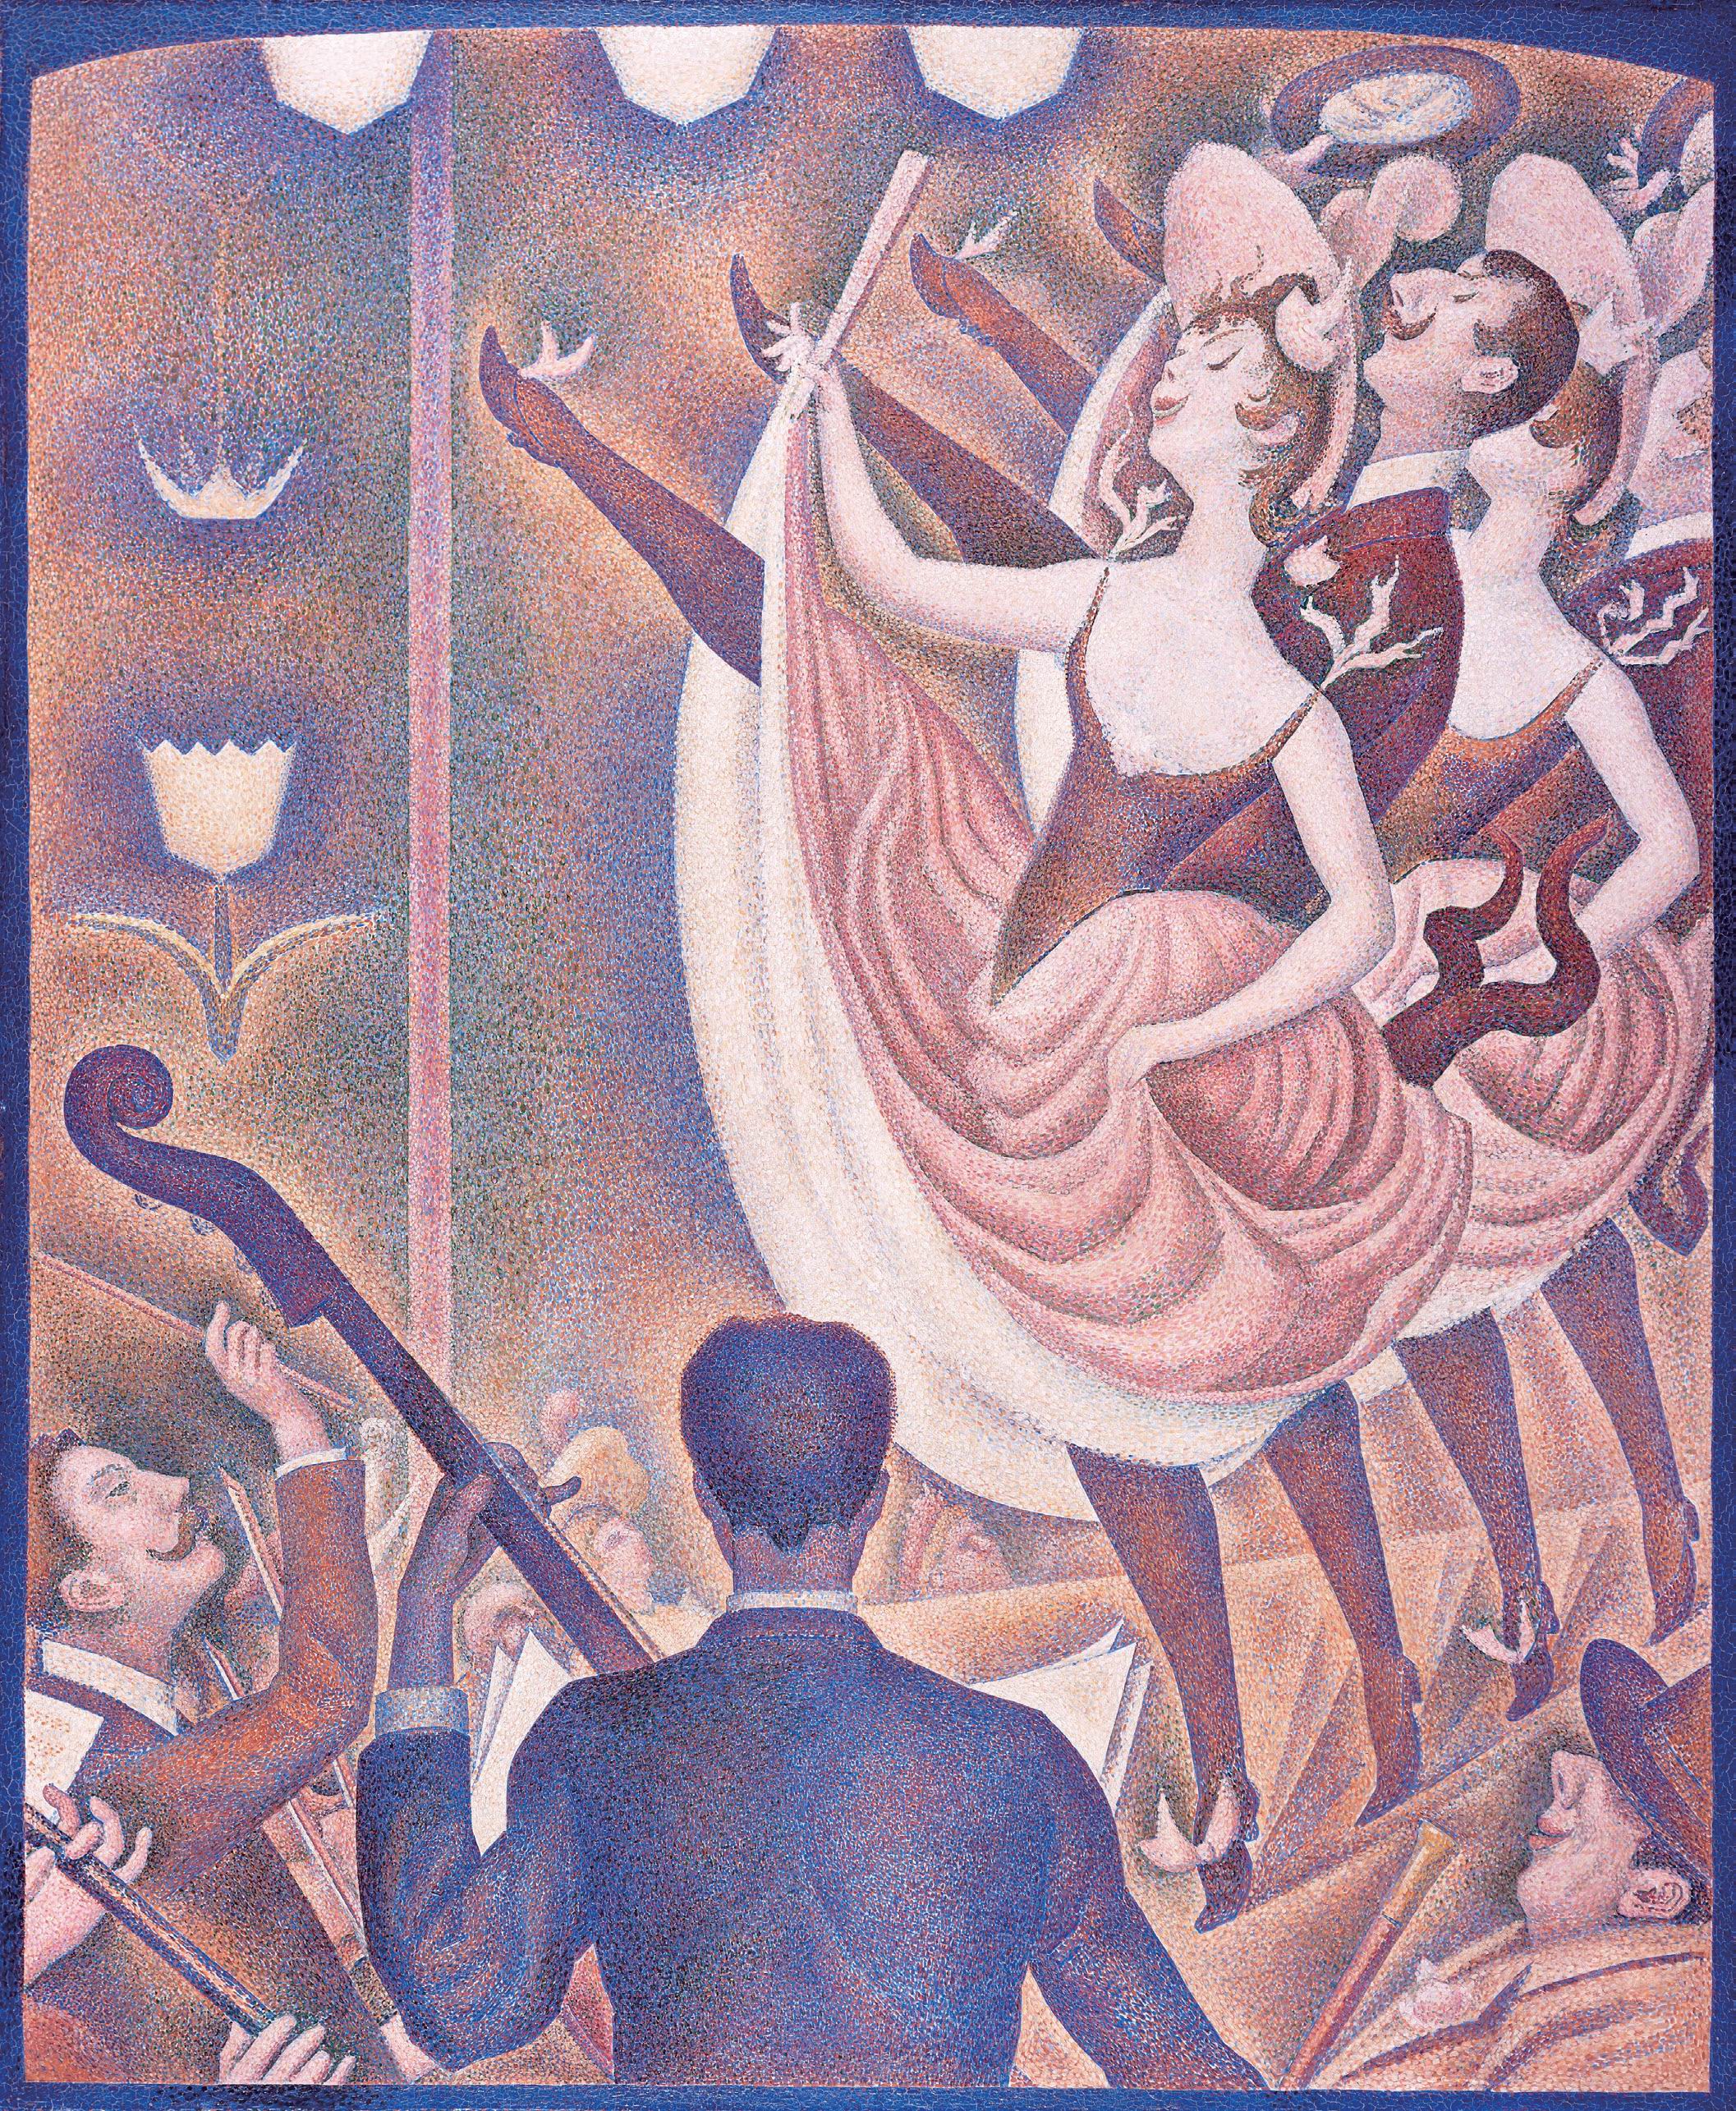 Oil On Canvas Oil Painting Georges Seurat Artwork Classical Art Women Men Moustache Musical Instrume 2114x2571